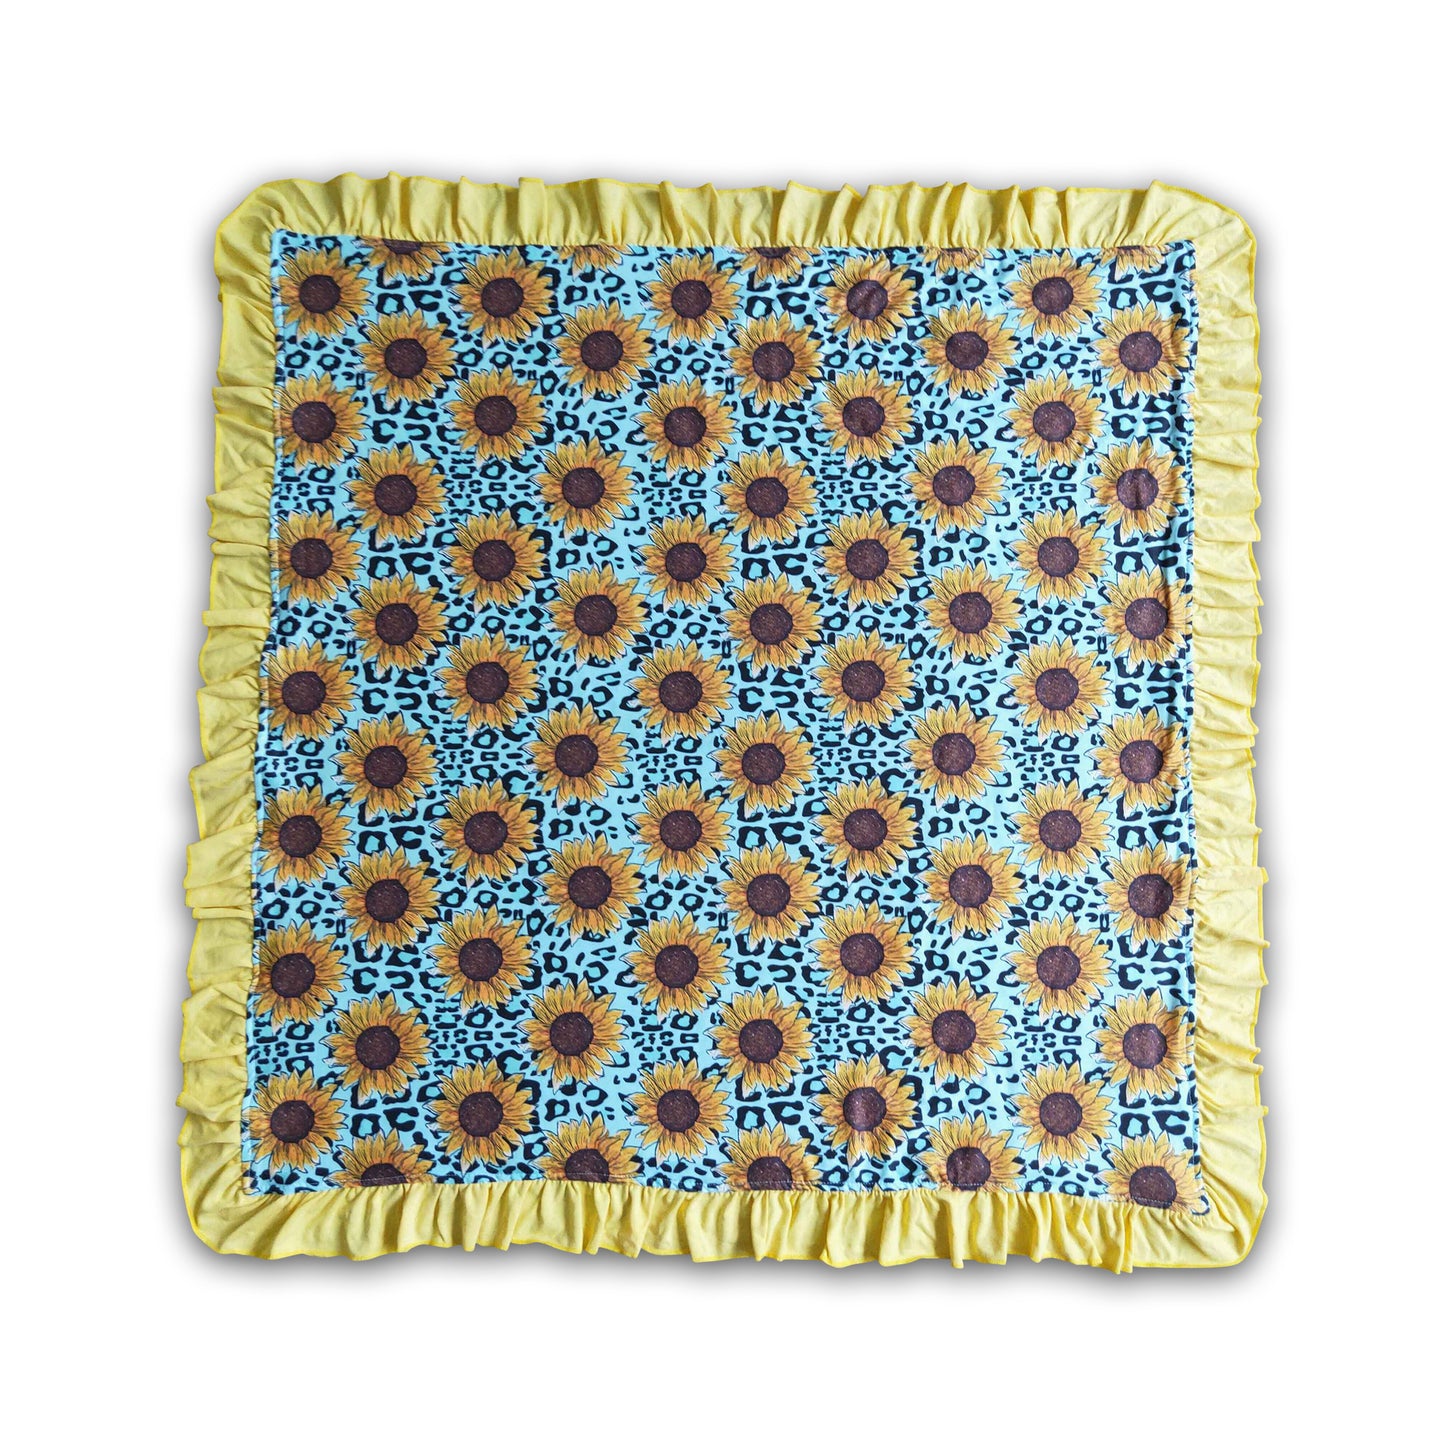 Sunflower leopard baby girls  ruffle blankets